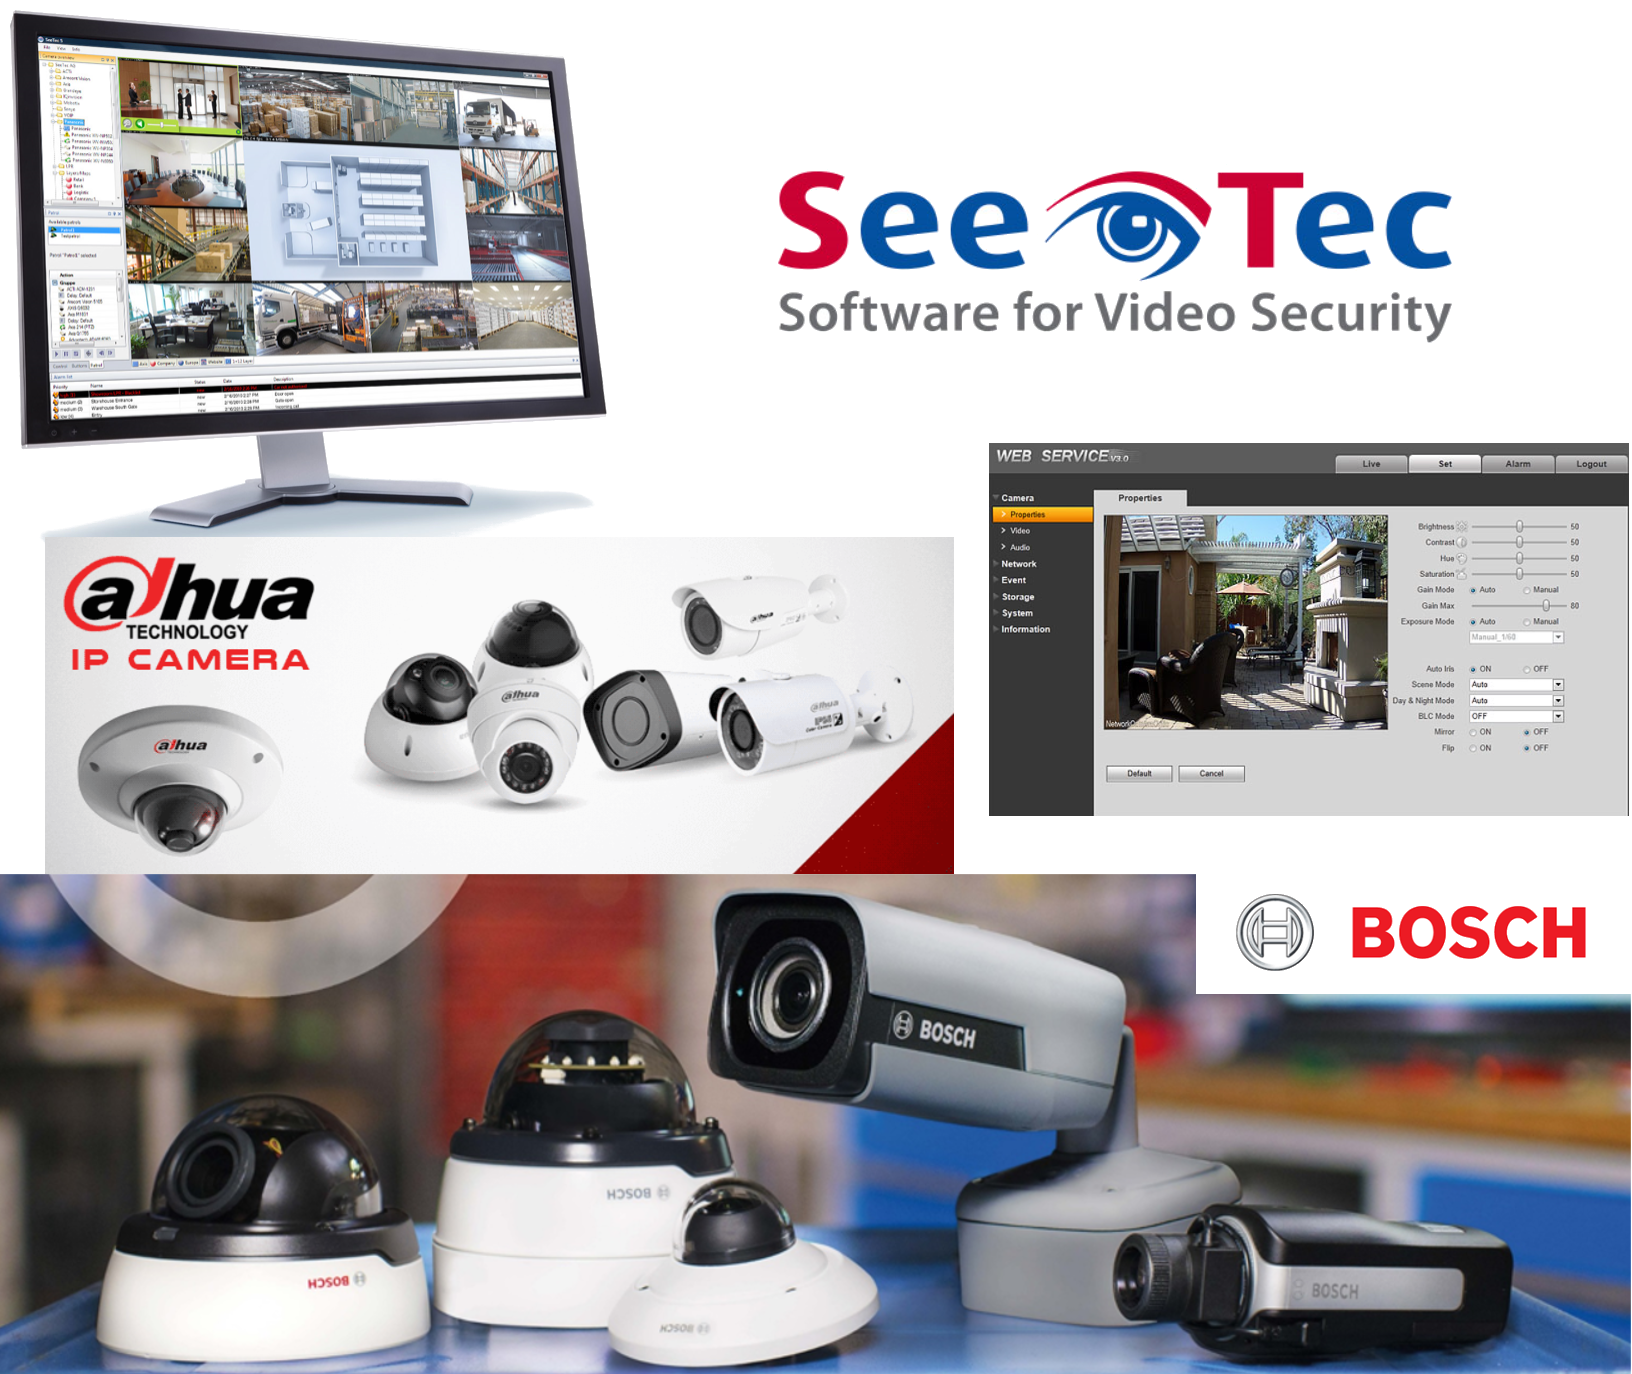 Les solutions professionnelles : Seetec, Bosch, Dahua